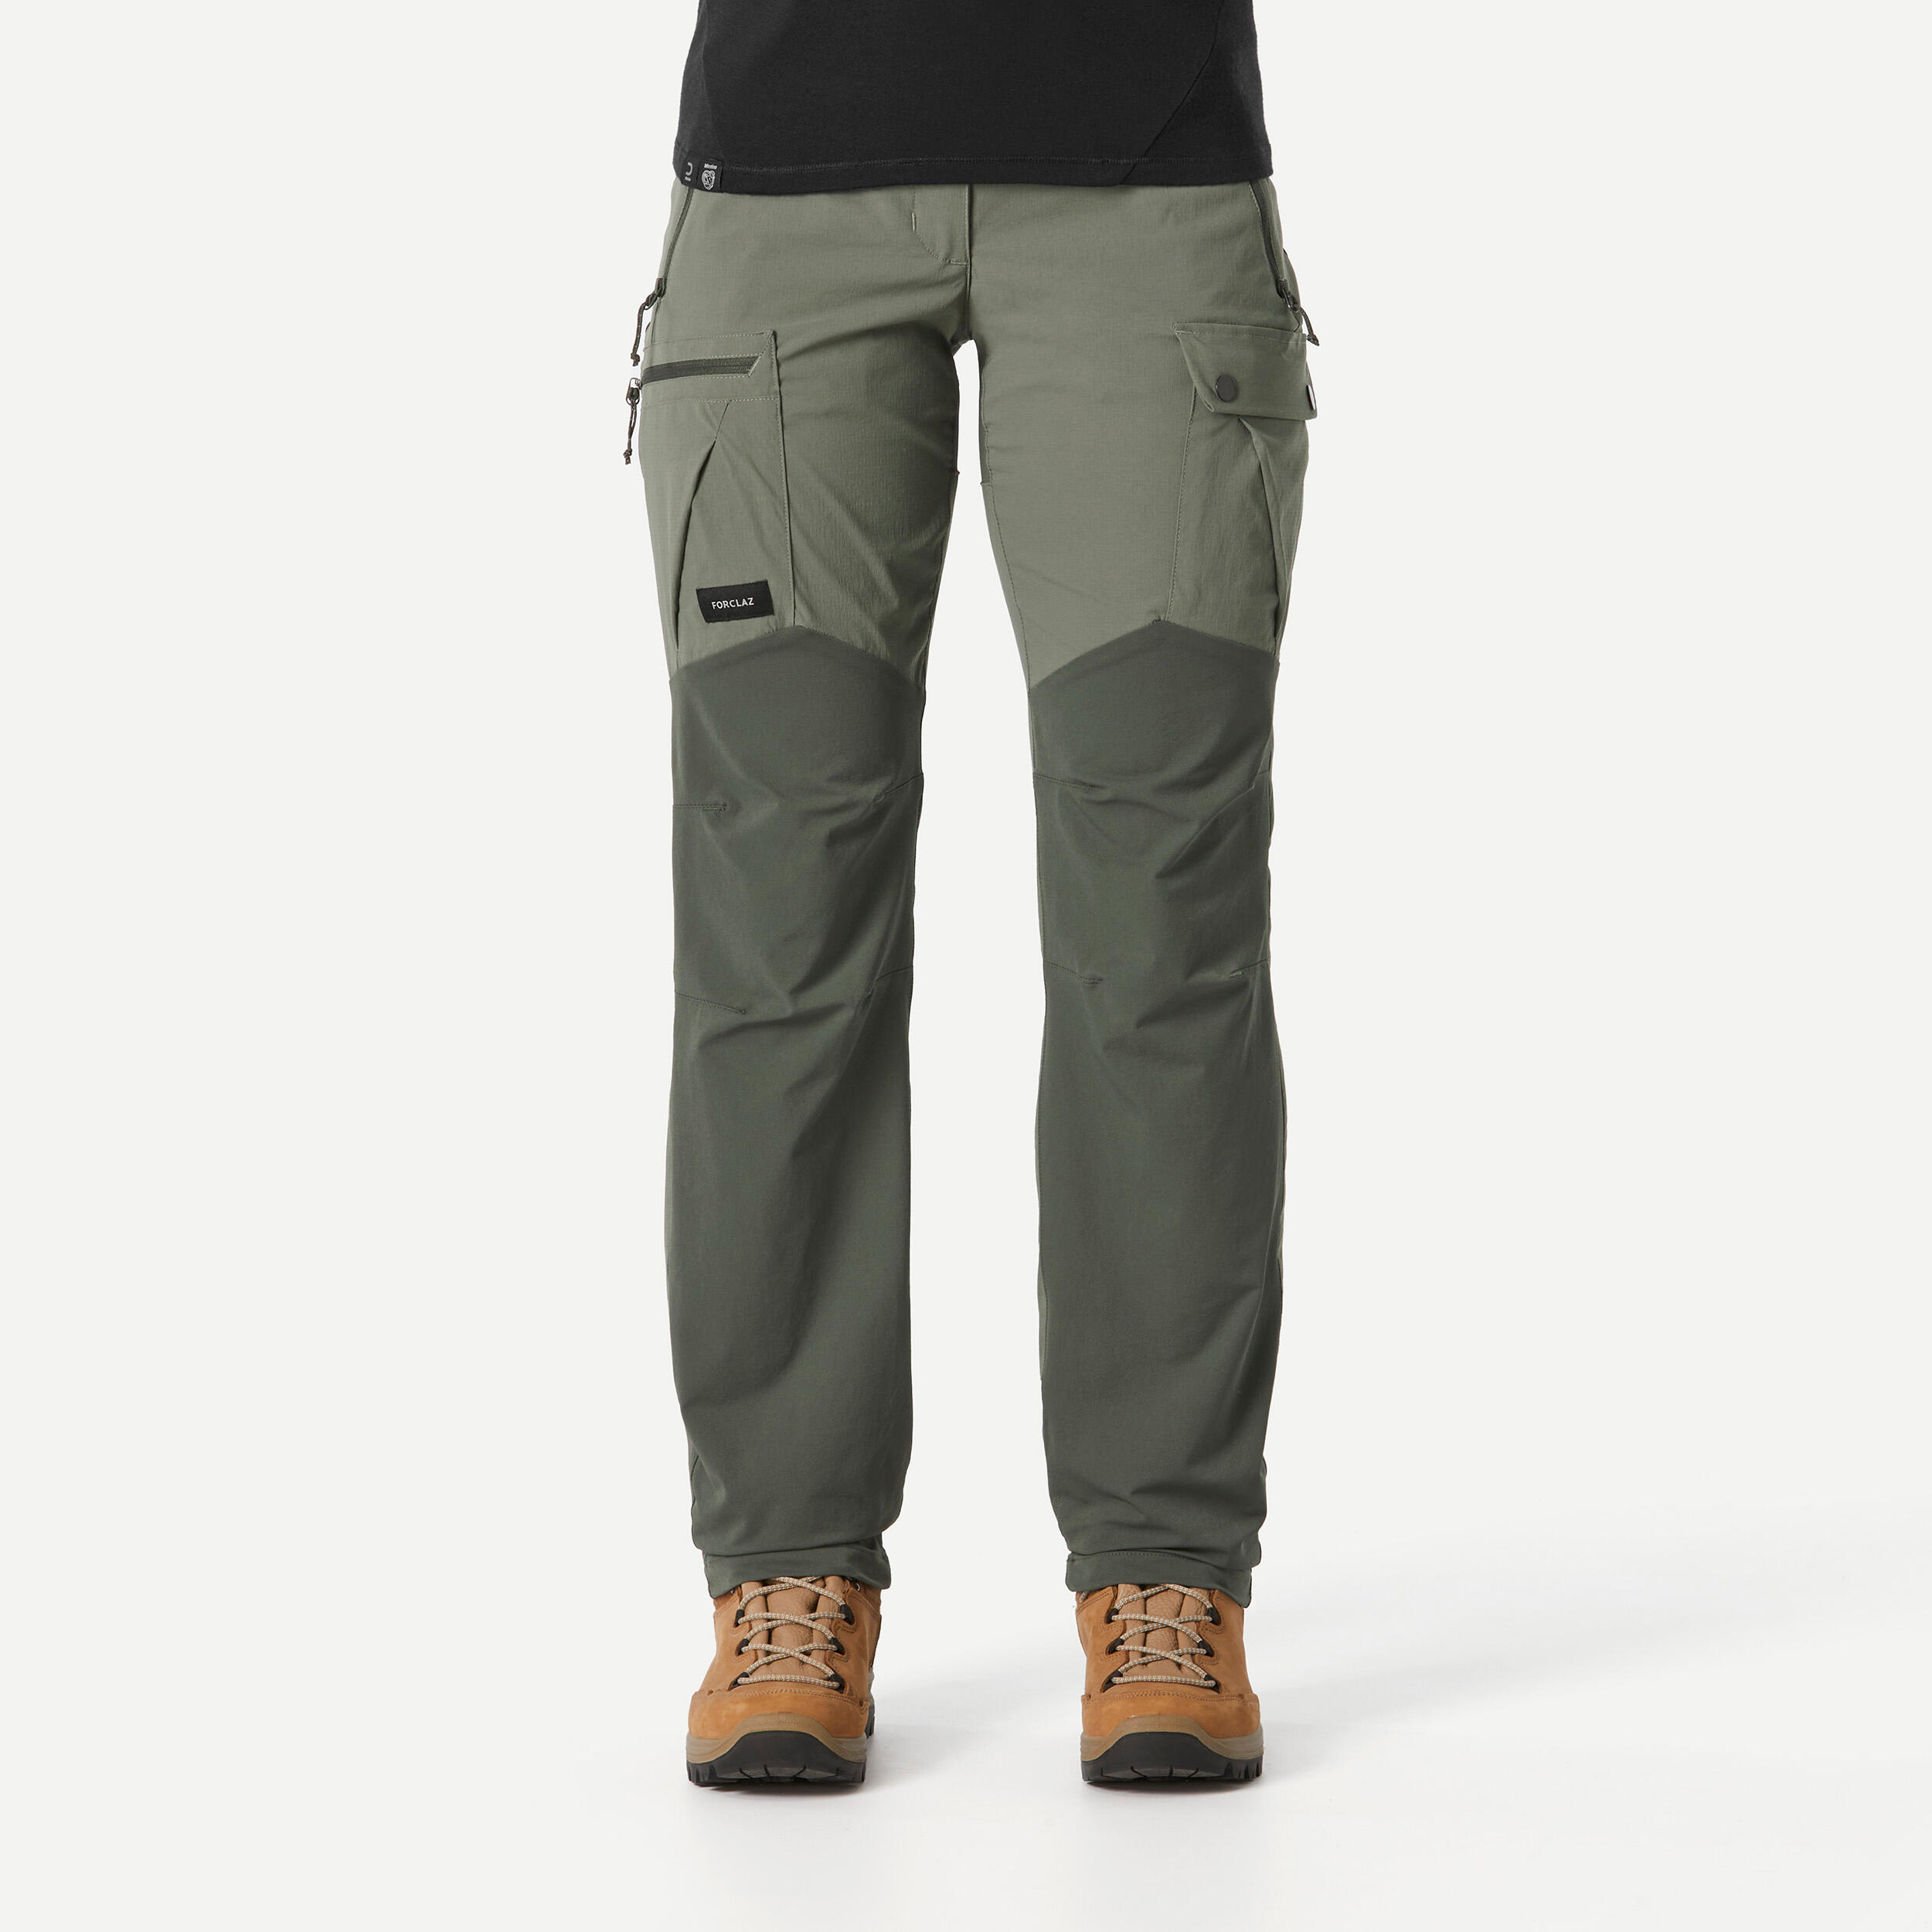 Men's Hiking Pants - Travel 100 - Carbon grey - Forclaz - Decathlon